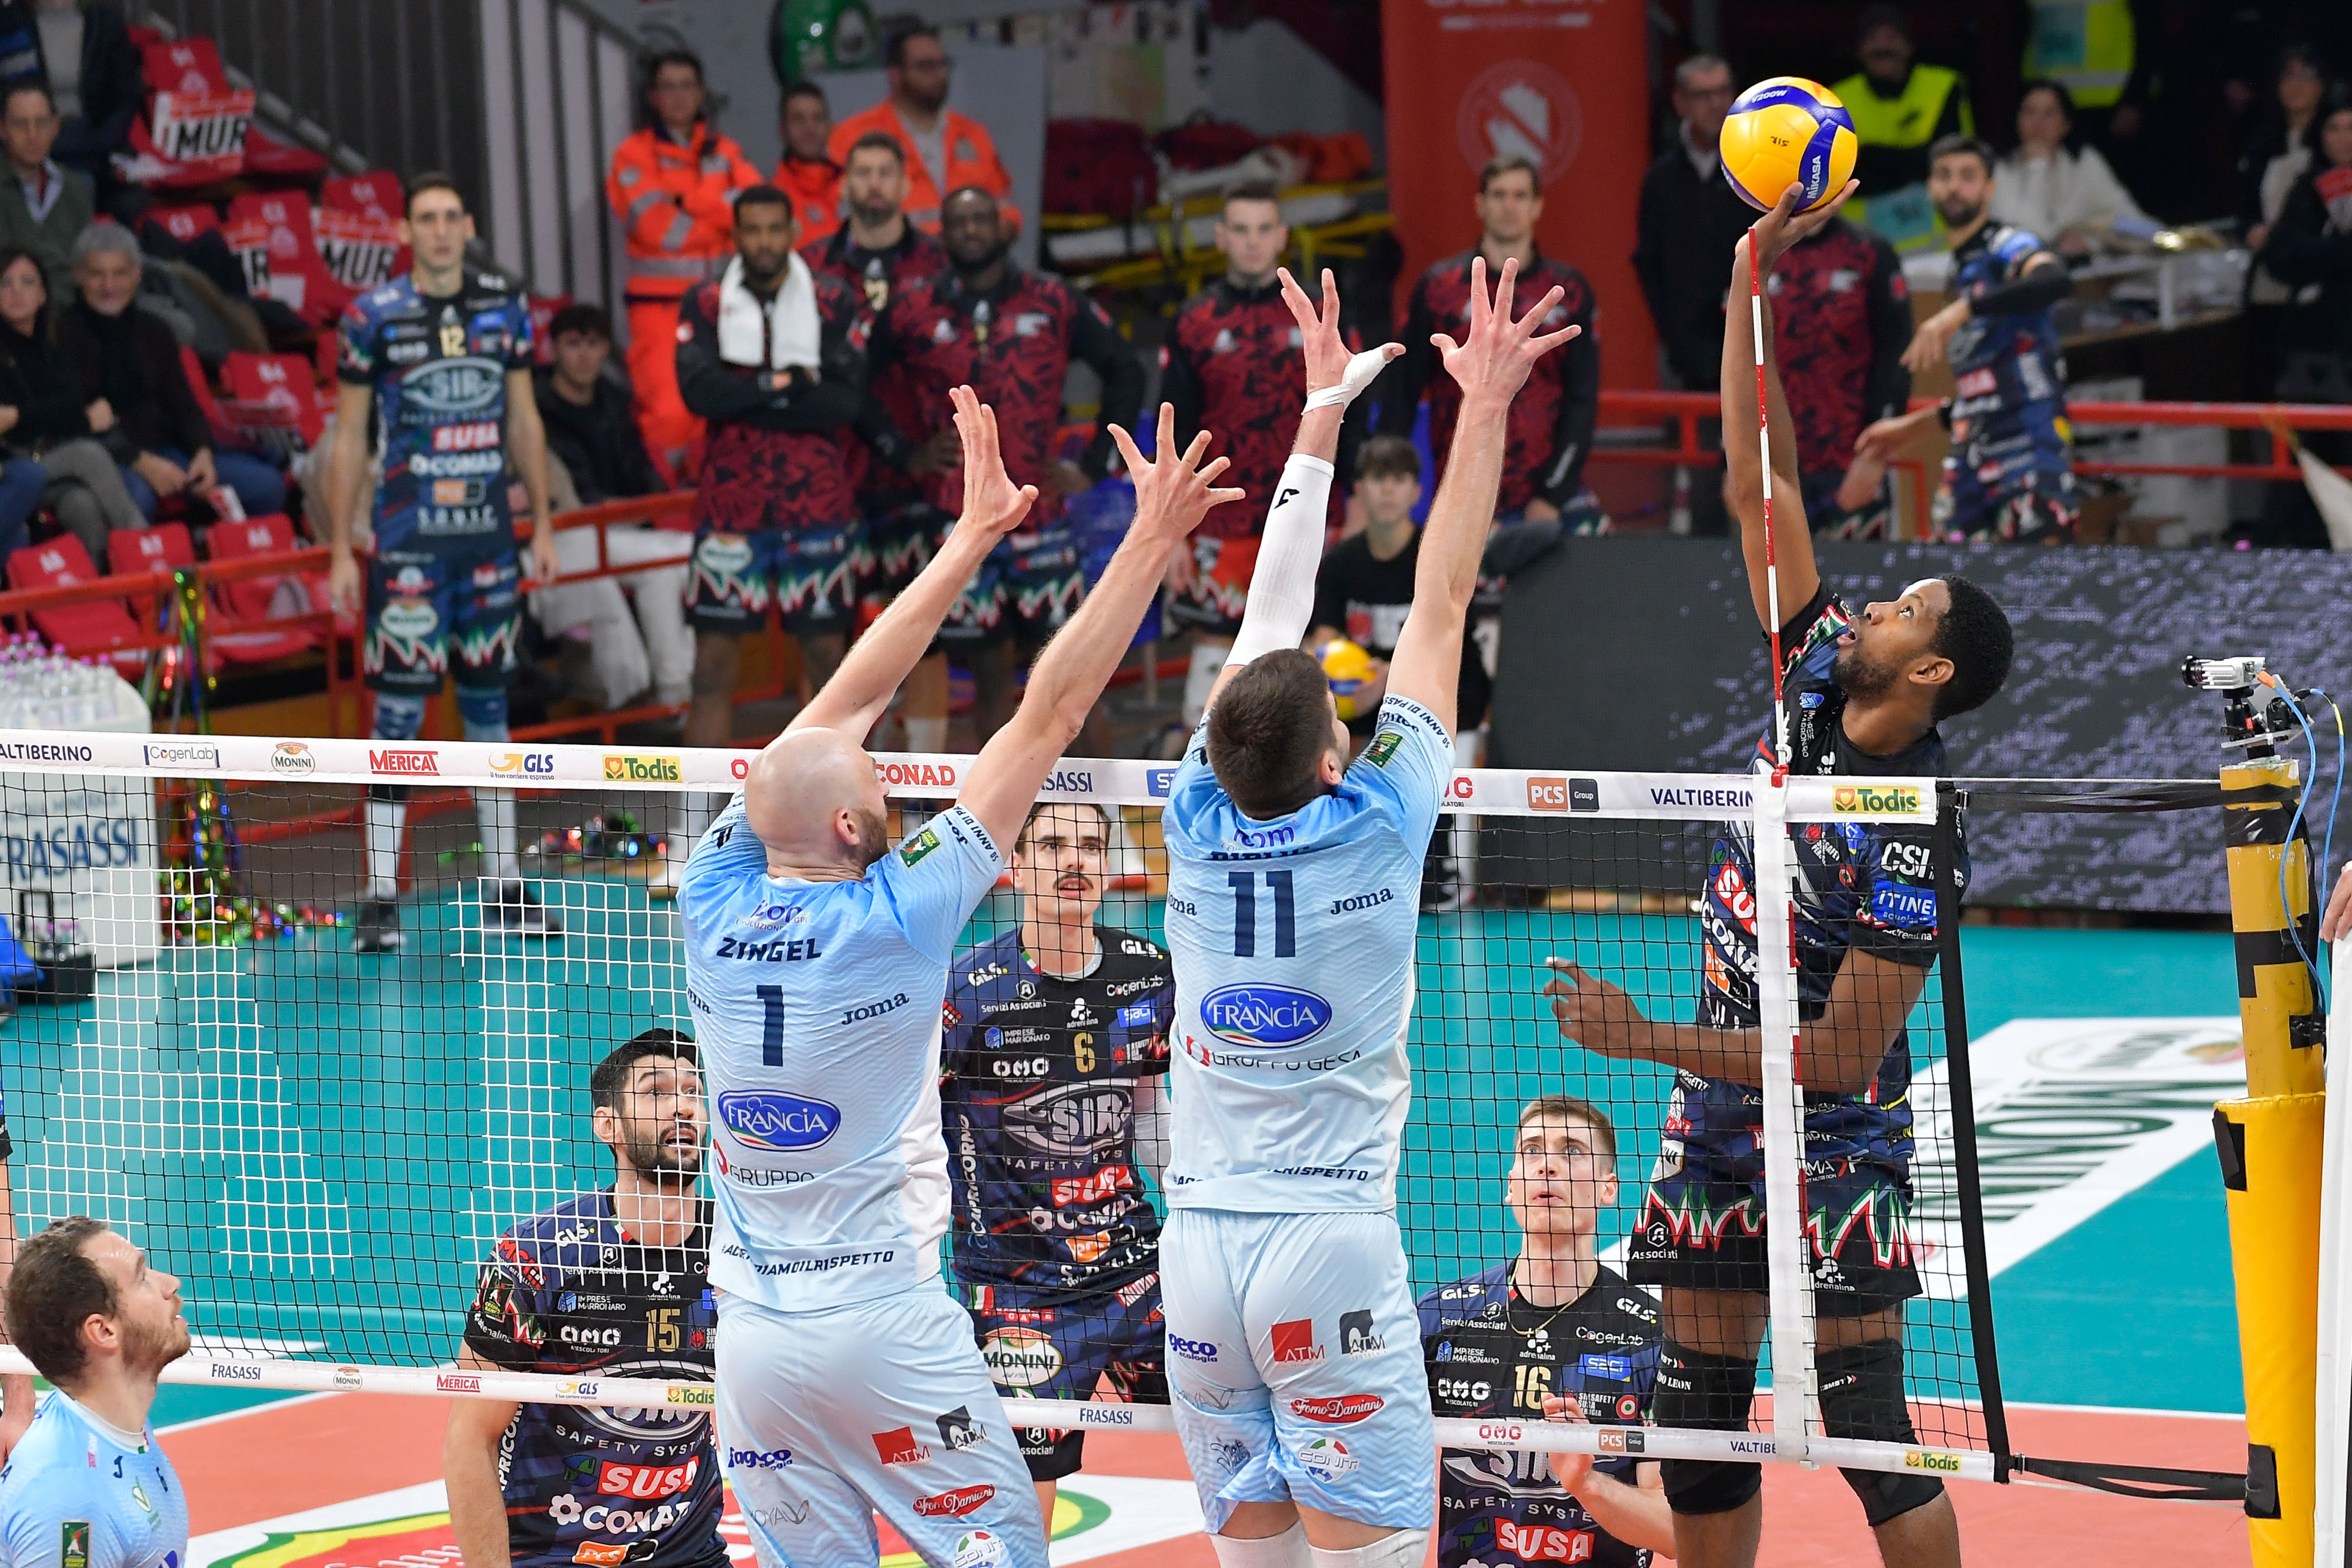 Perugia extend winning streak to Coppa Italia volleyballworld